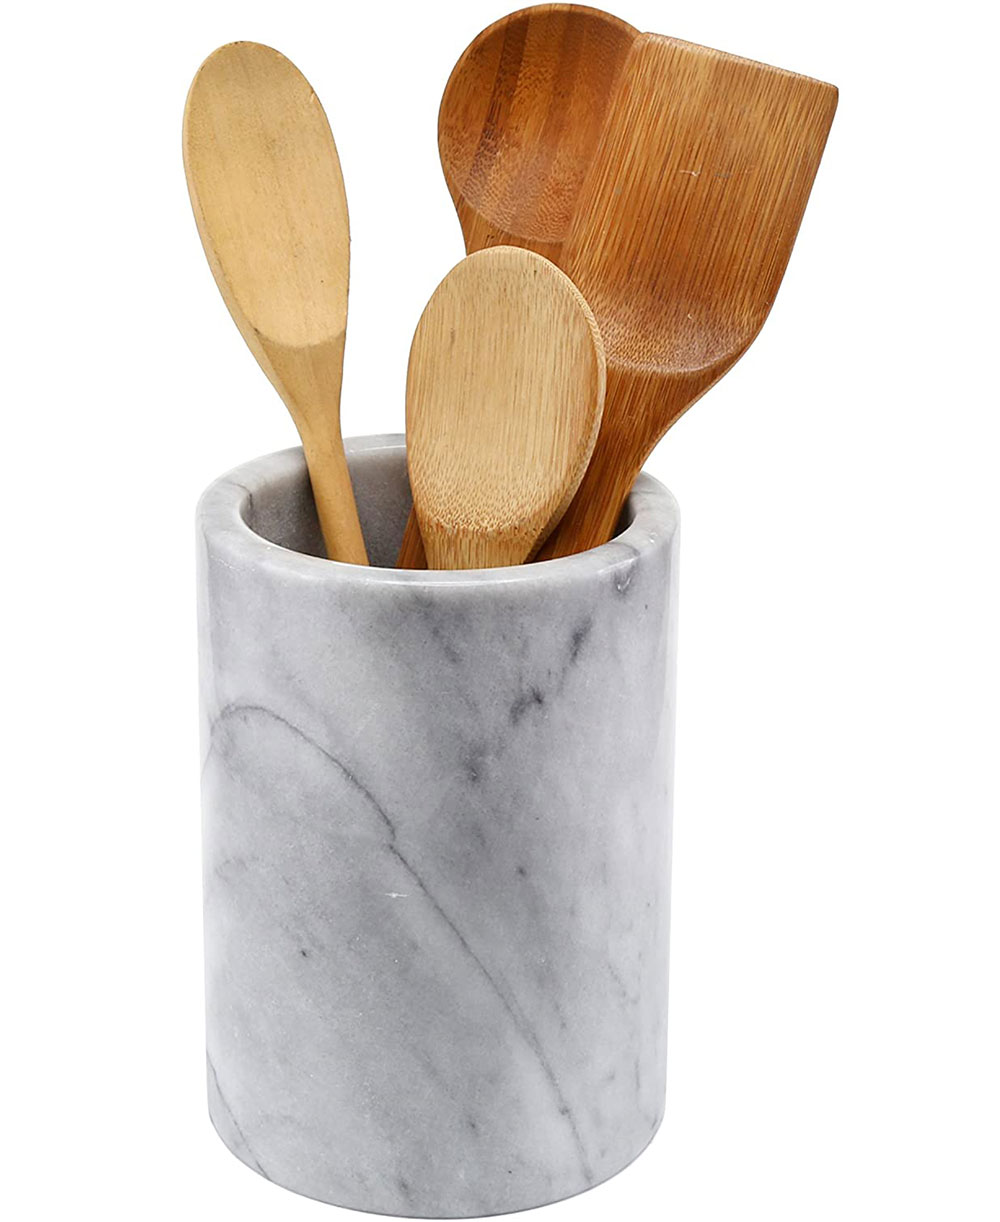 Marble-Kitchen-Utensil-Holder What's the best kitchen utensil holder out there?